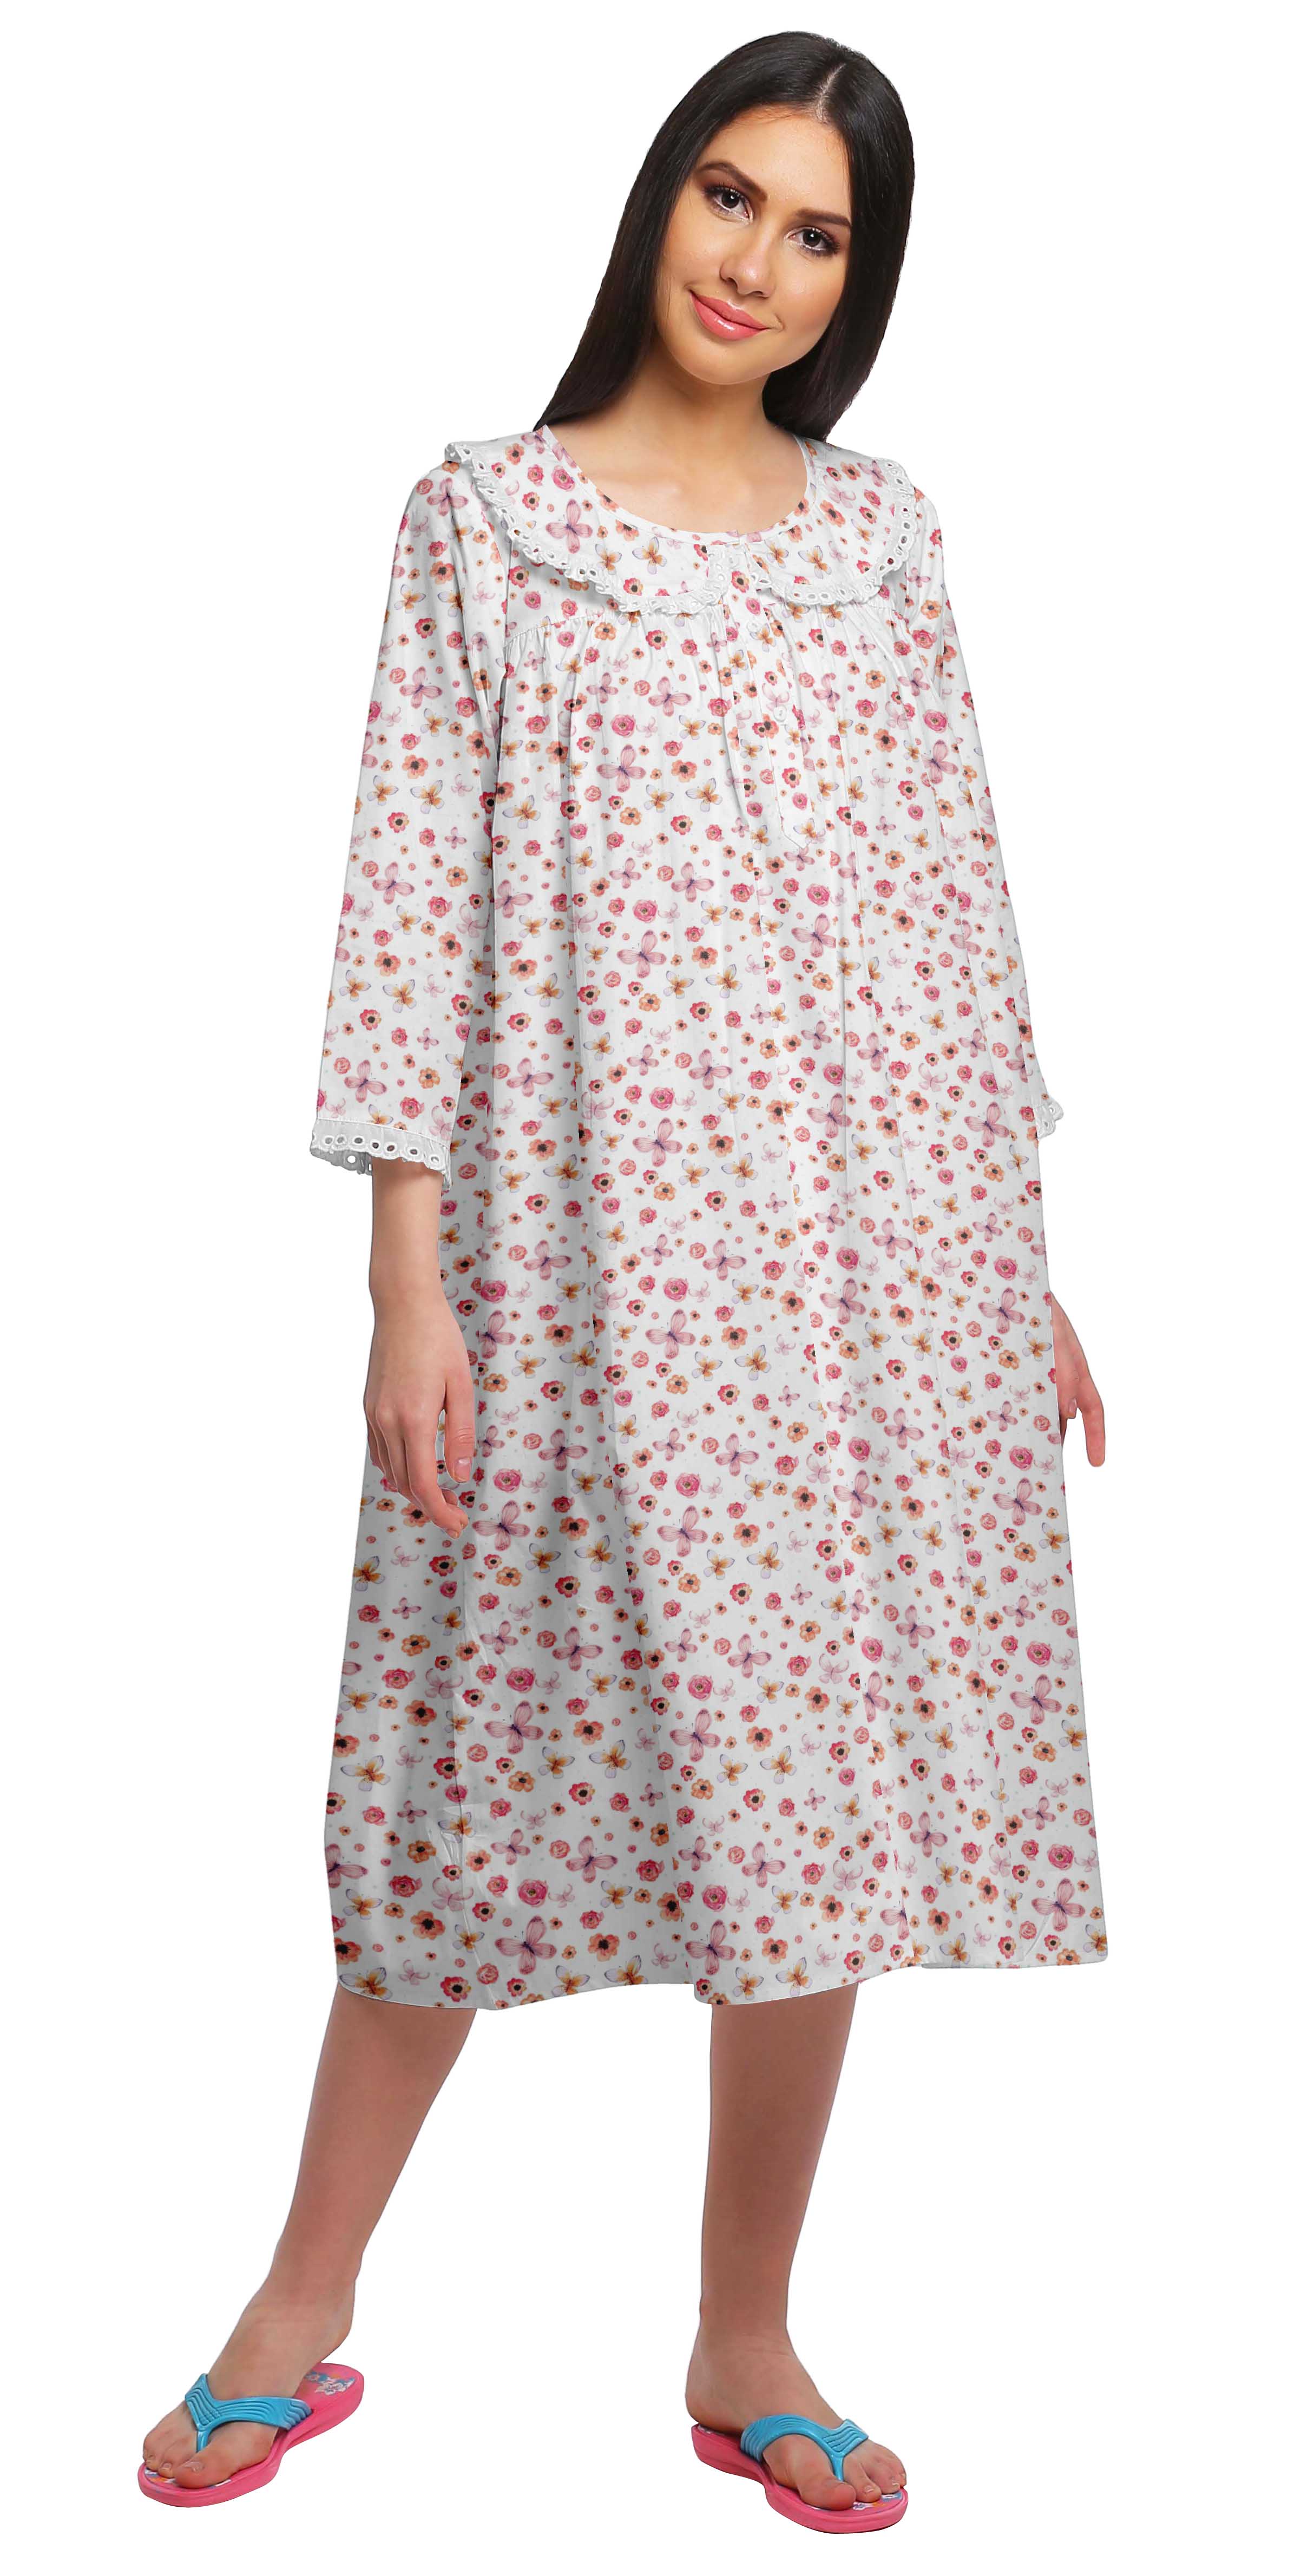 Moomaya Womens Printed Nightdress Knee Length Cotton Sleepwear Fl 531m Ebay 